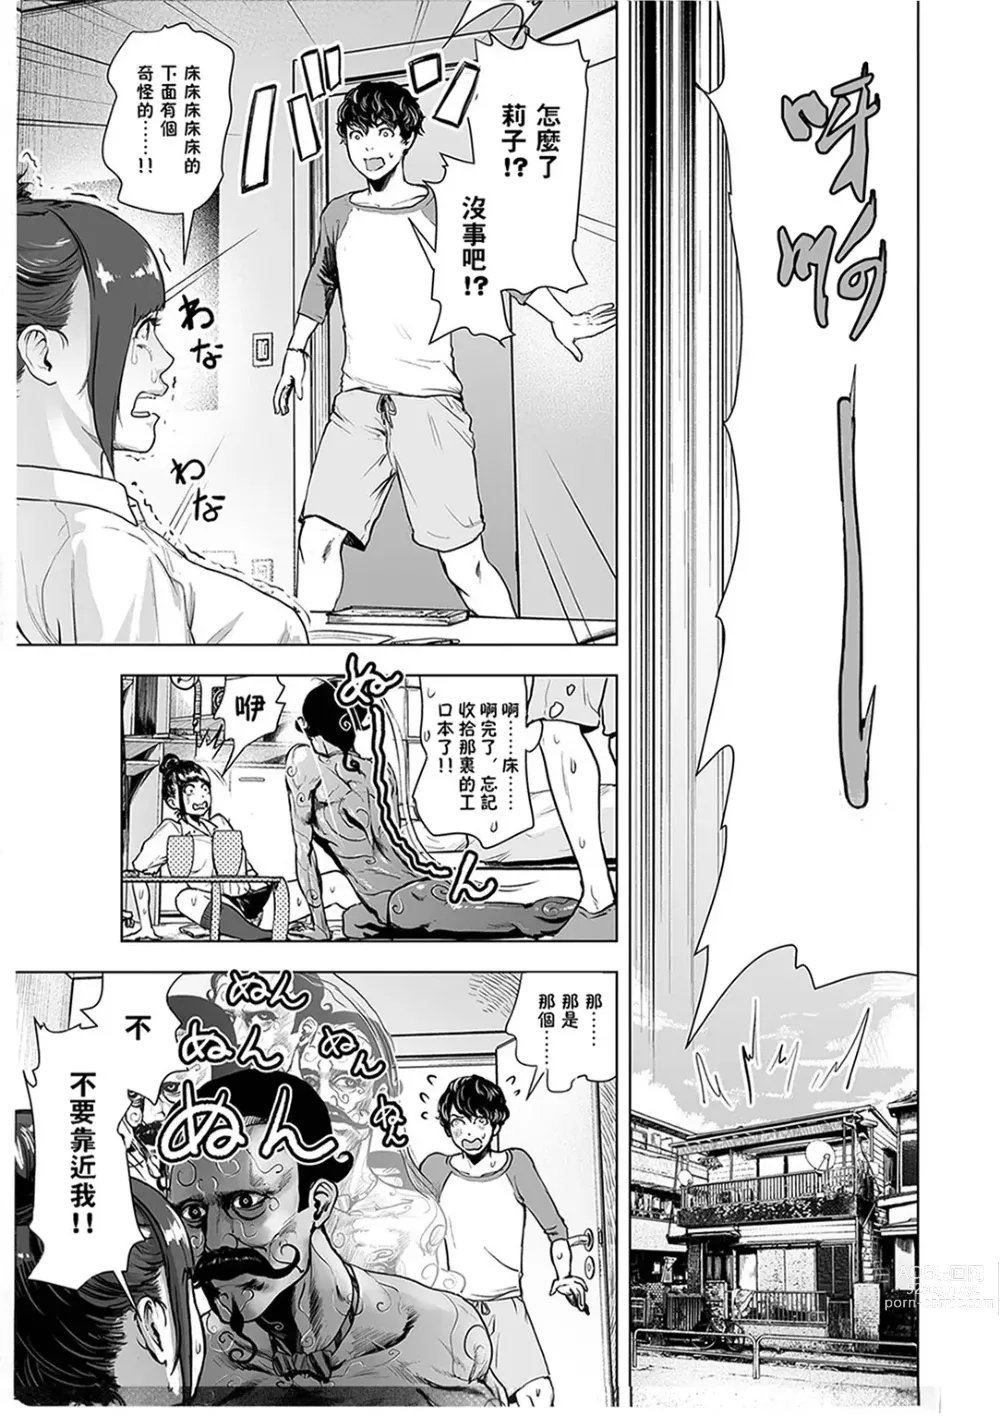 Page 6 of manga #Futsuu no Onnanoko